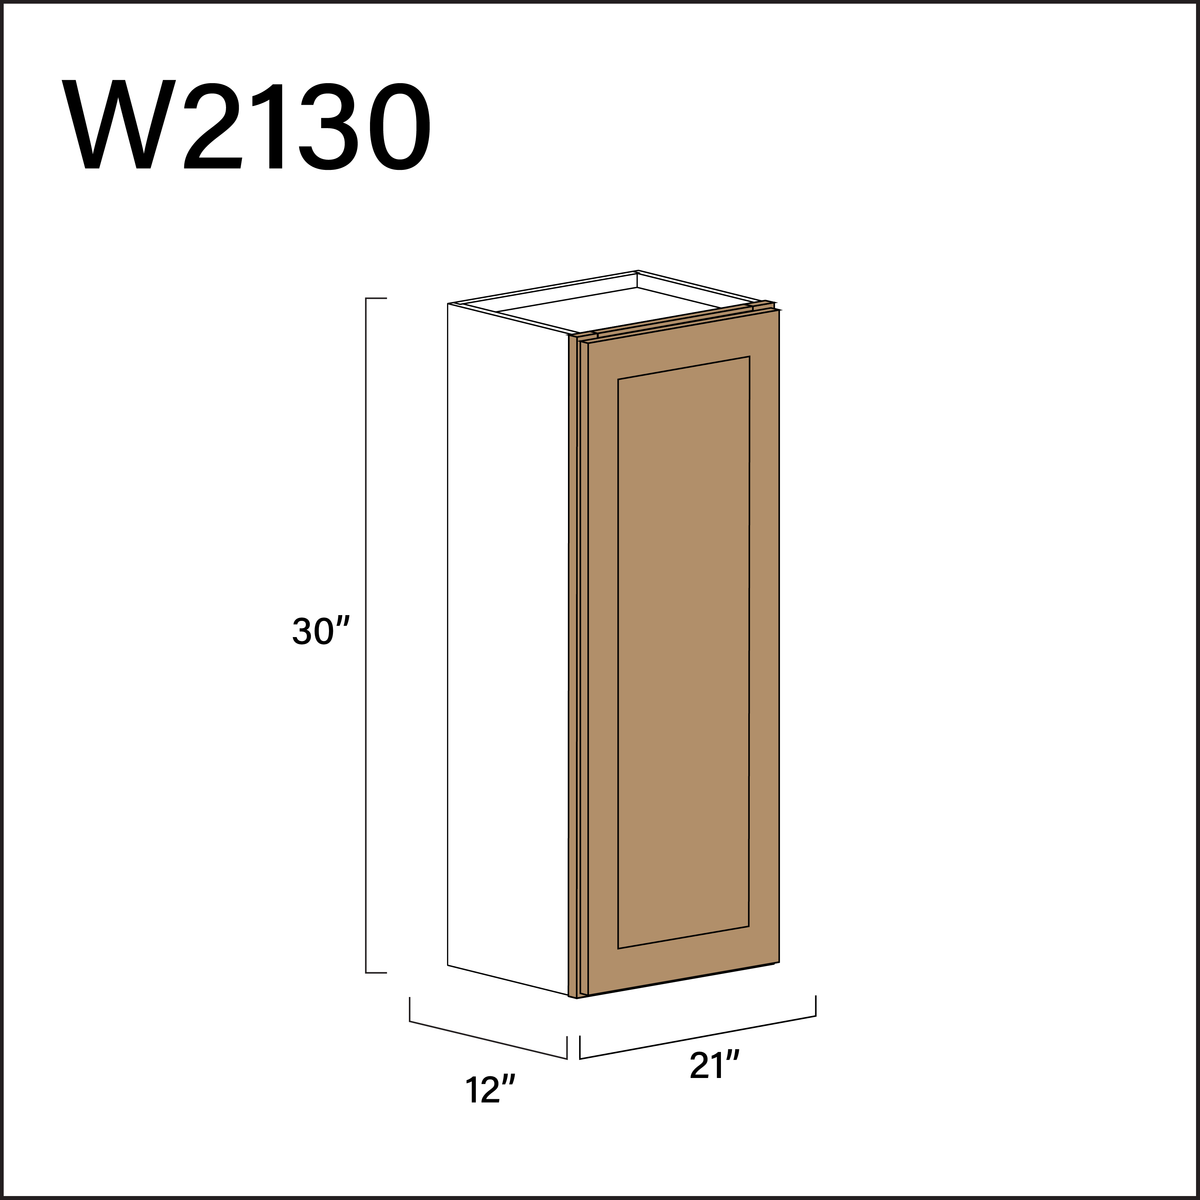 Alton Iced Mocha Single Door Wall Cabinet - 21" W x 30" H x 12" D